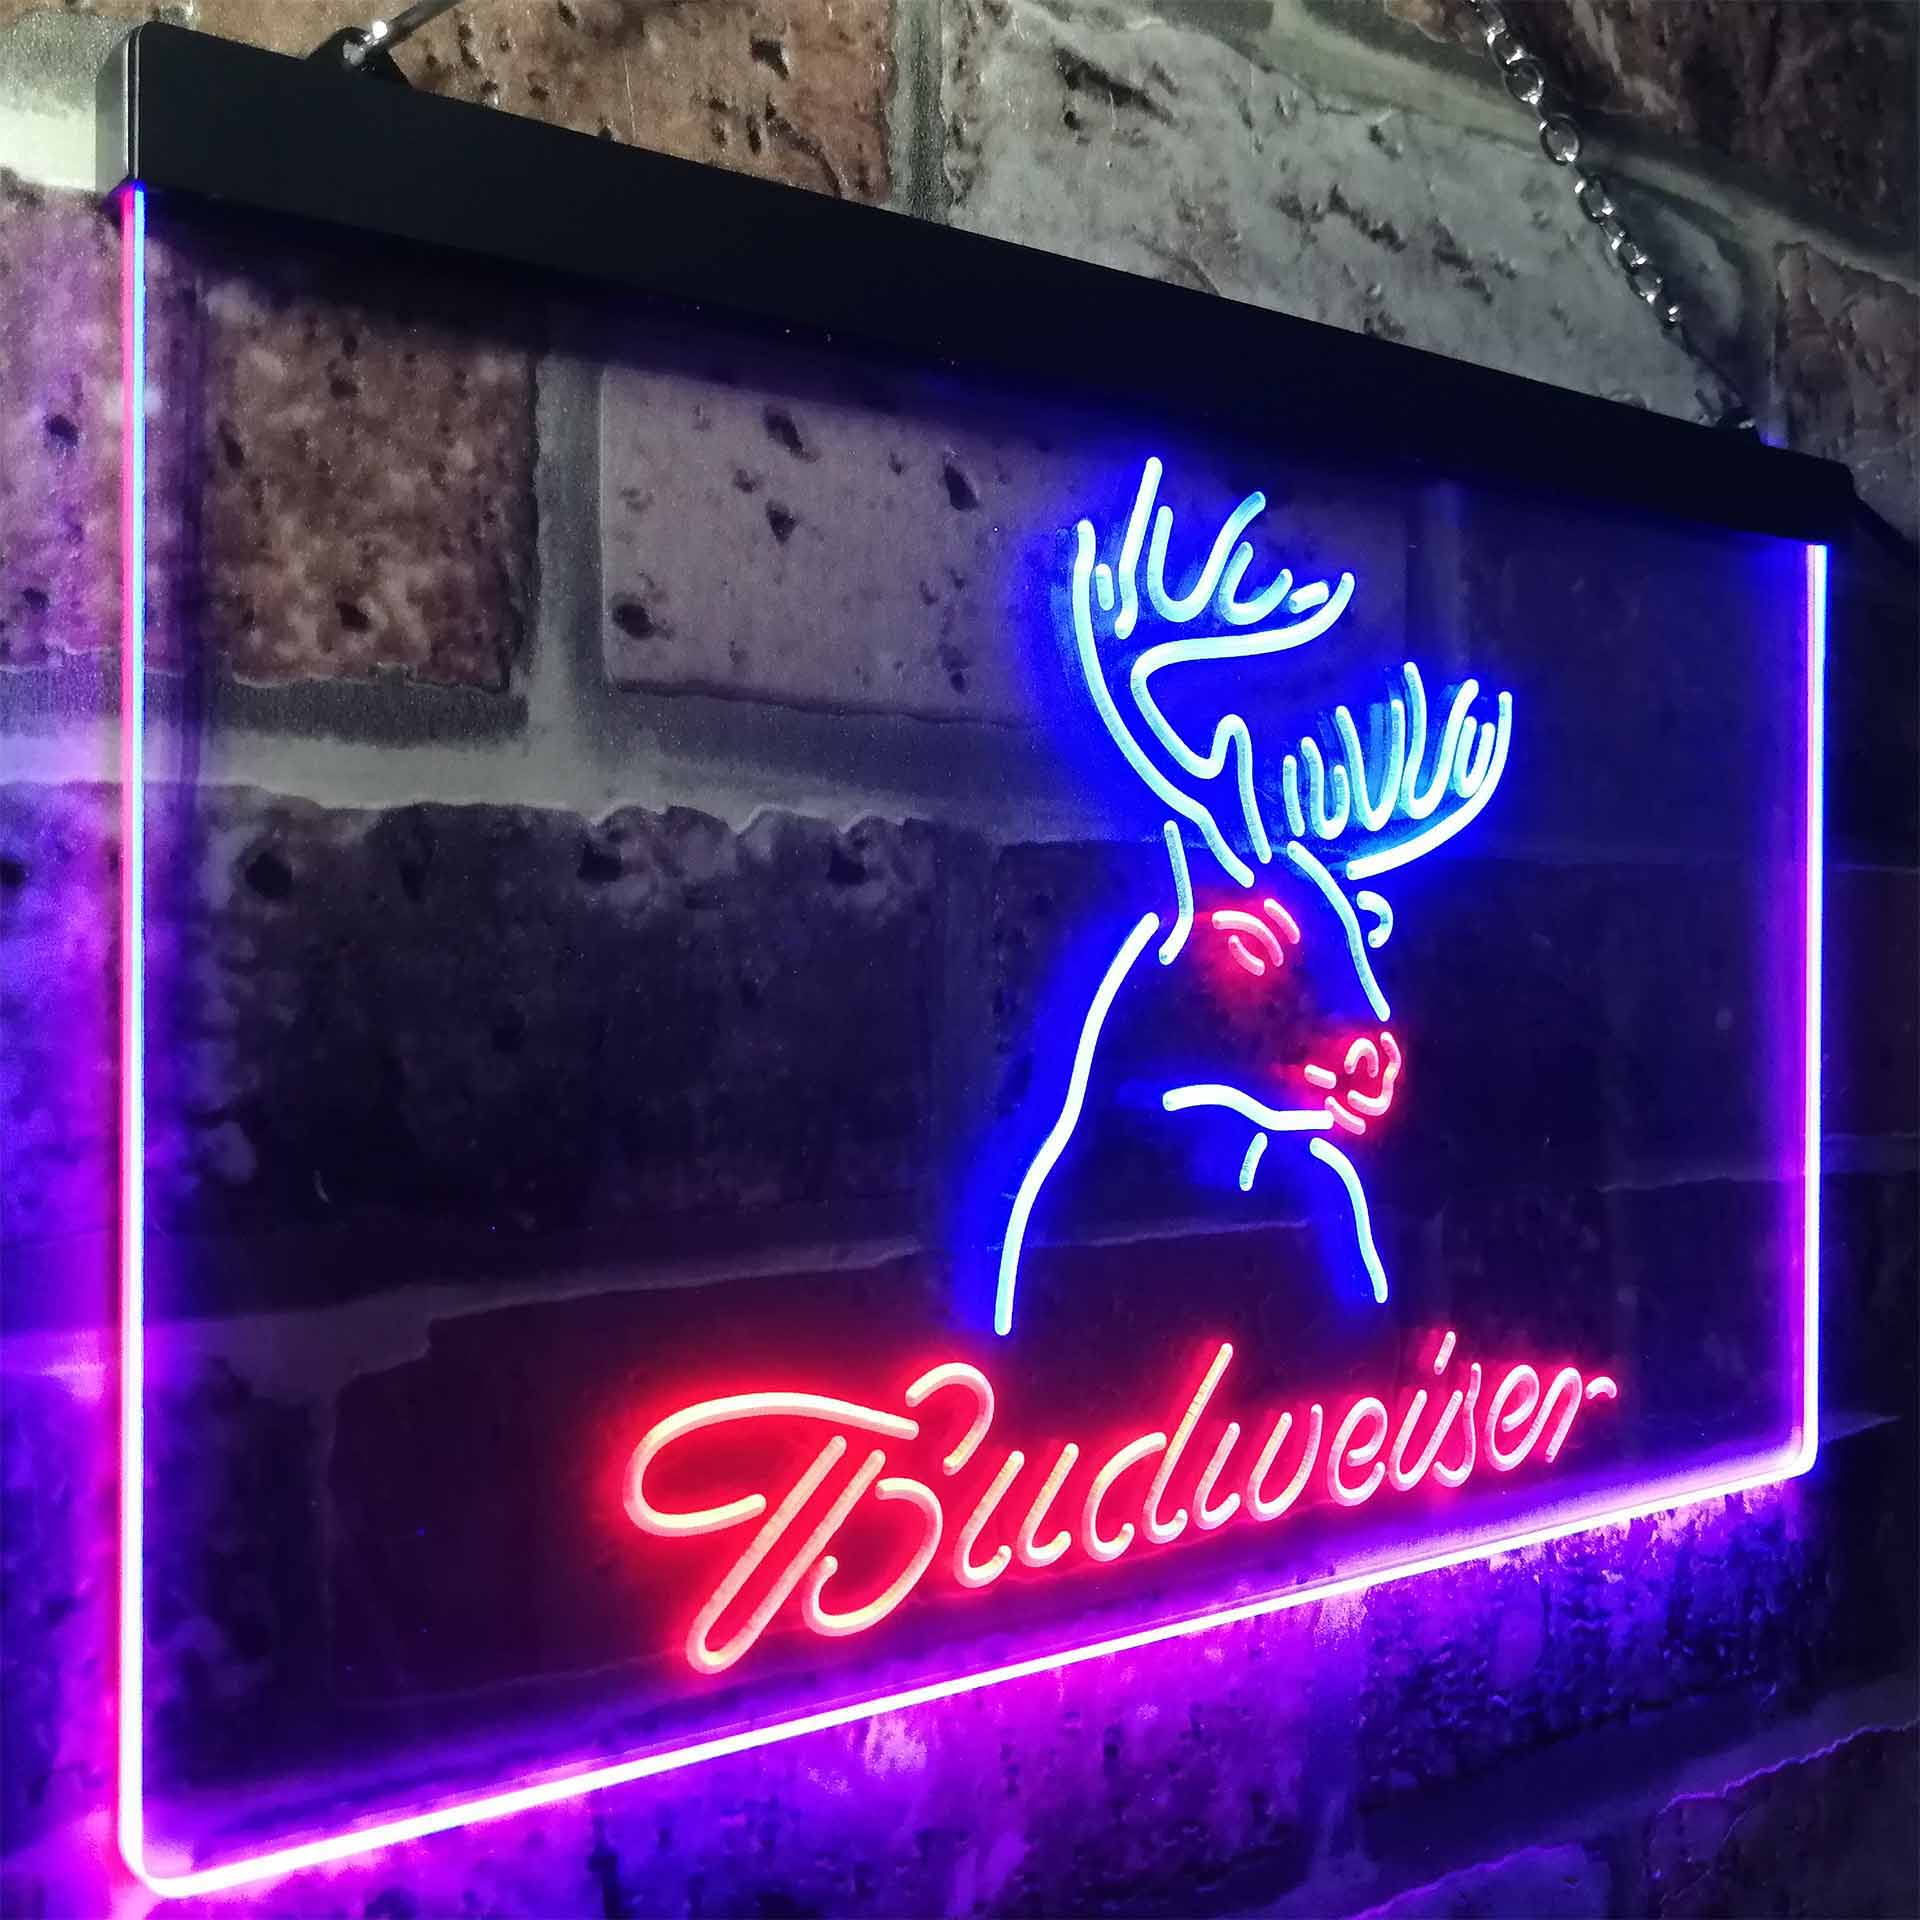 Budweiser Deer Hurt Beer LED Neon Sign